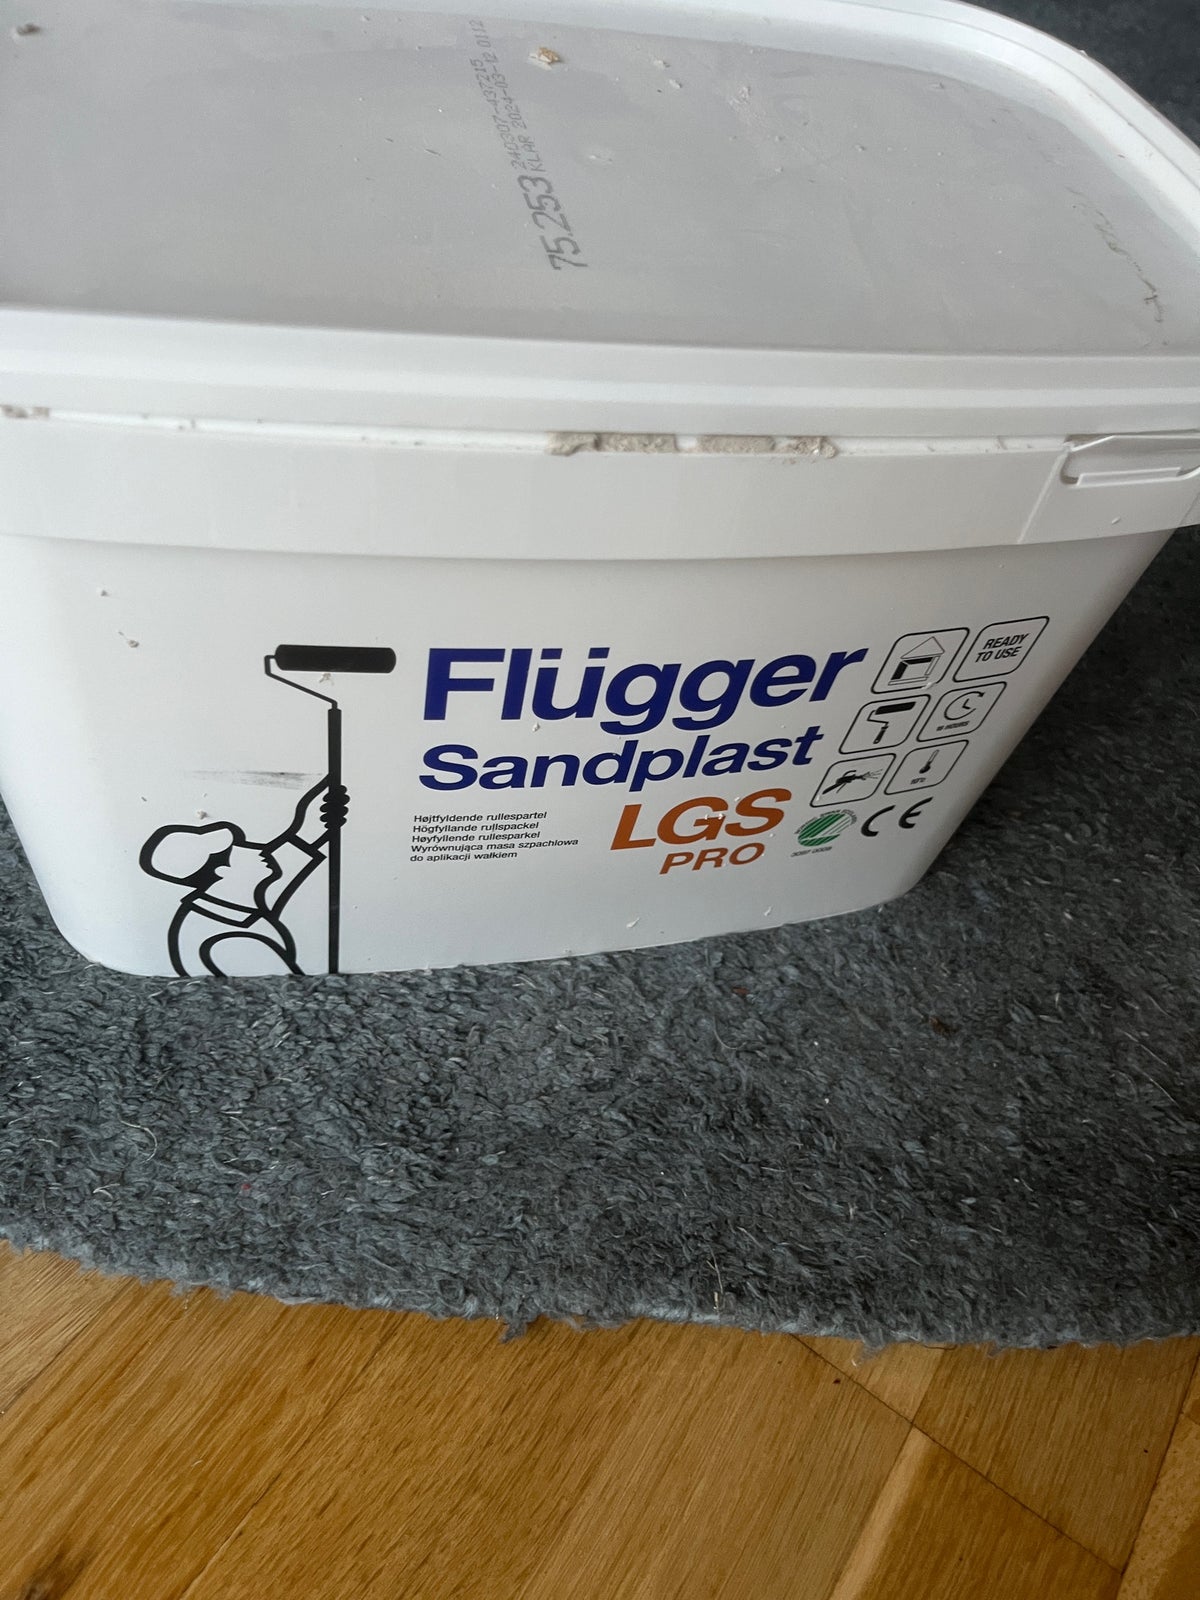 Sandplast / Vægspartel LGS Pro, Flügger, 12 liter